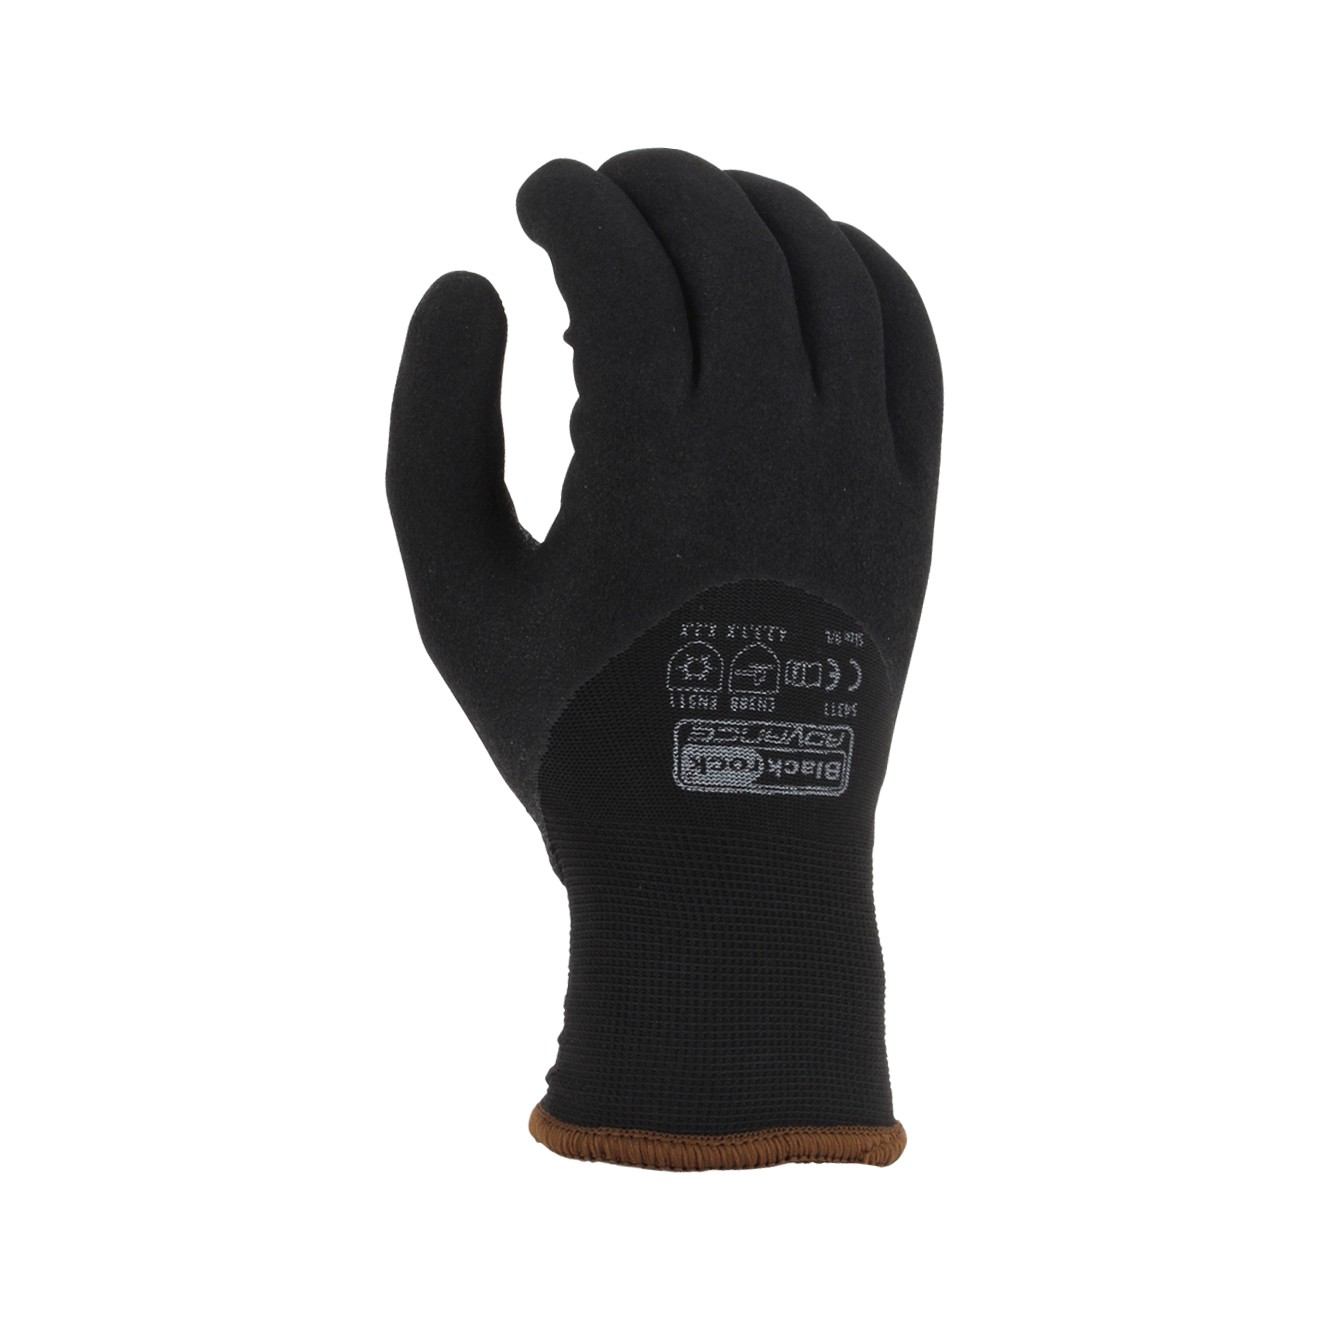 54311 5 x Blackrock Advance Thermotite Thermal Winter Safety Grip Work Gloves 